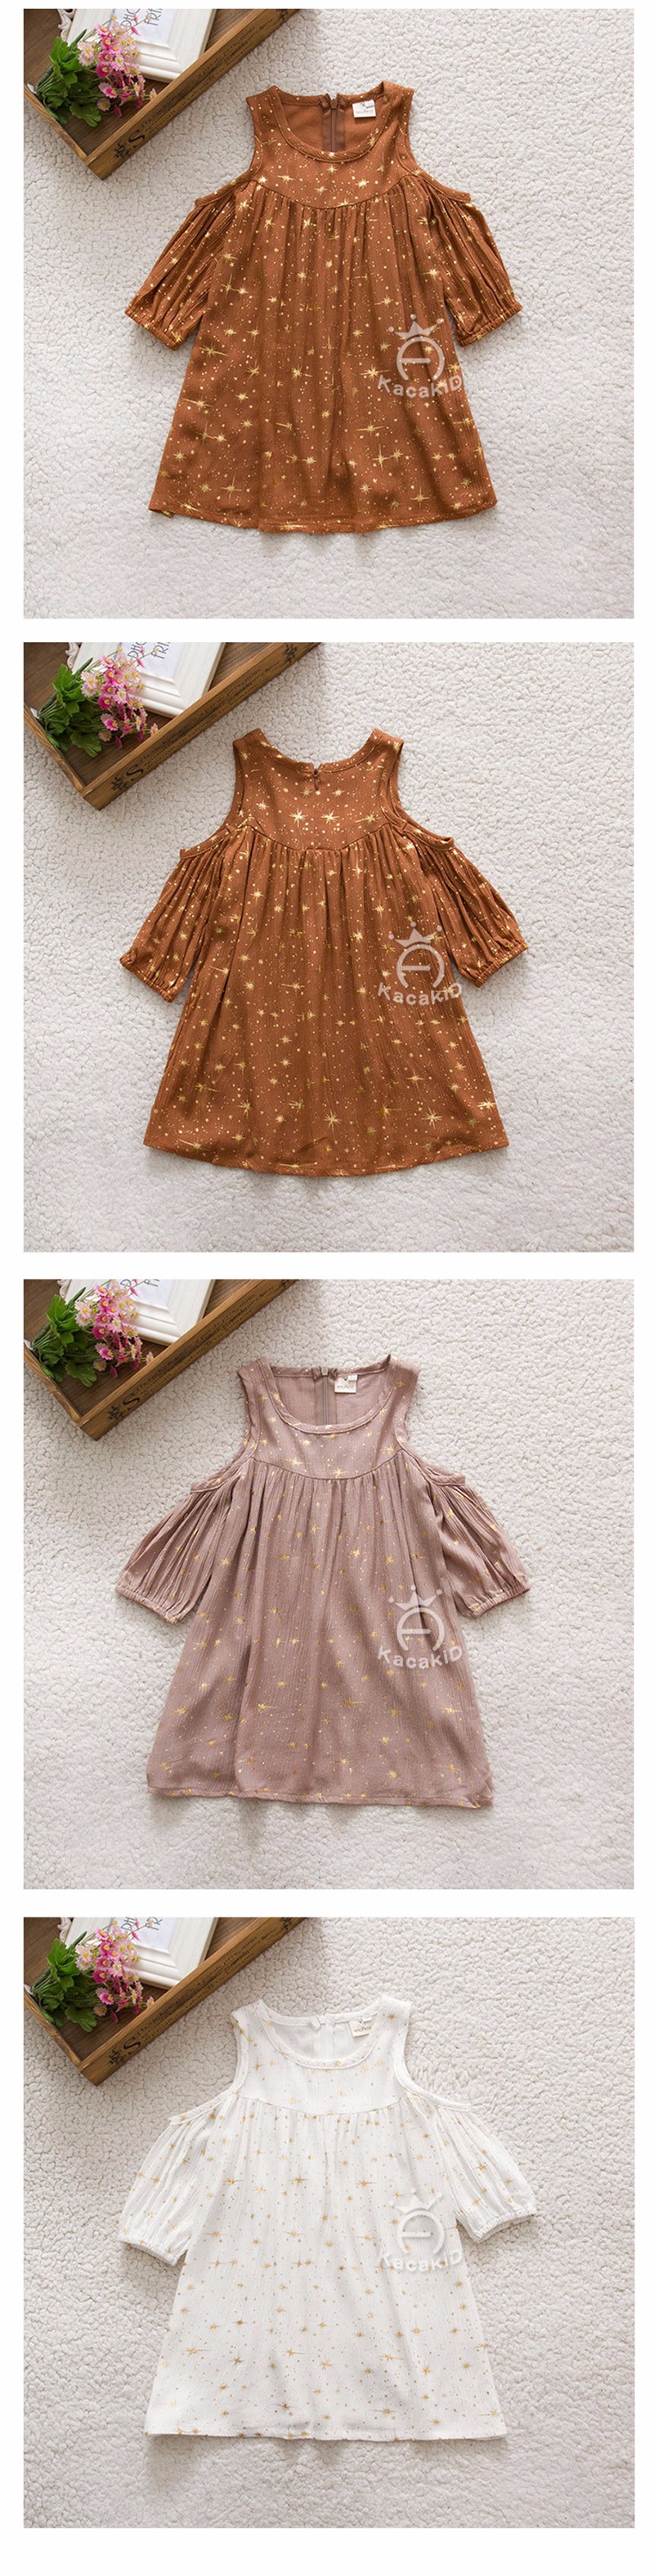 Summer-hot-sale-baby-girls-fashion-star-printed-shoulder-off-dress-kids-casual-dresses-2189-32364852806